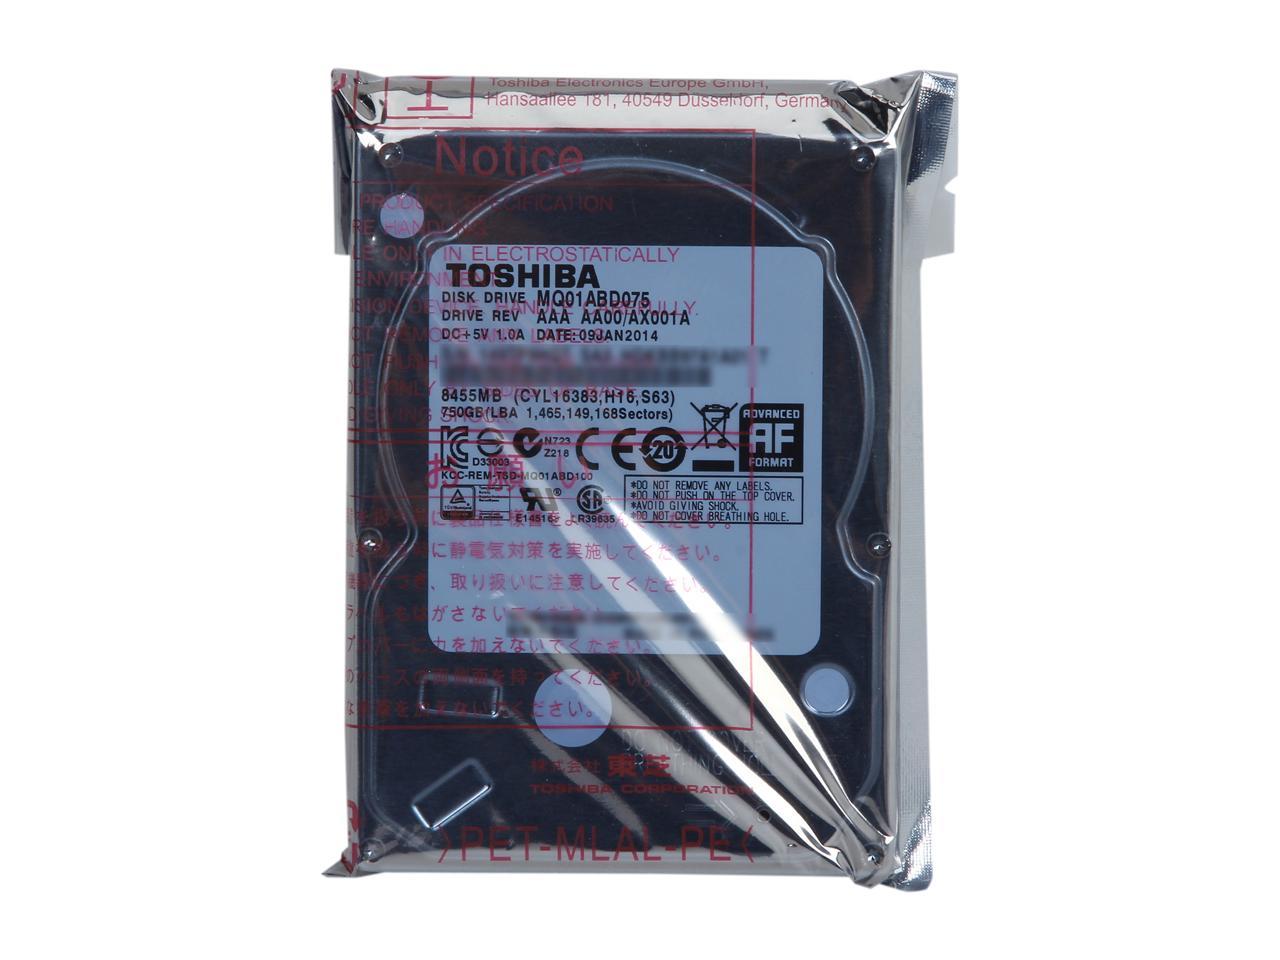 Toshiba Mq01Abd075 750Gb 5400 Rpm 8Mb Cache Sata 3.0Gb/S 2.5" Internal Notebook Hard Drive